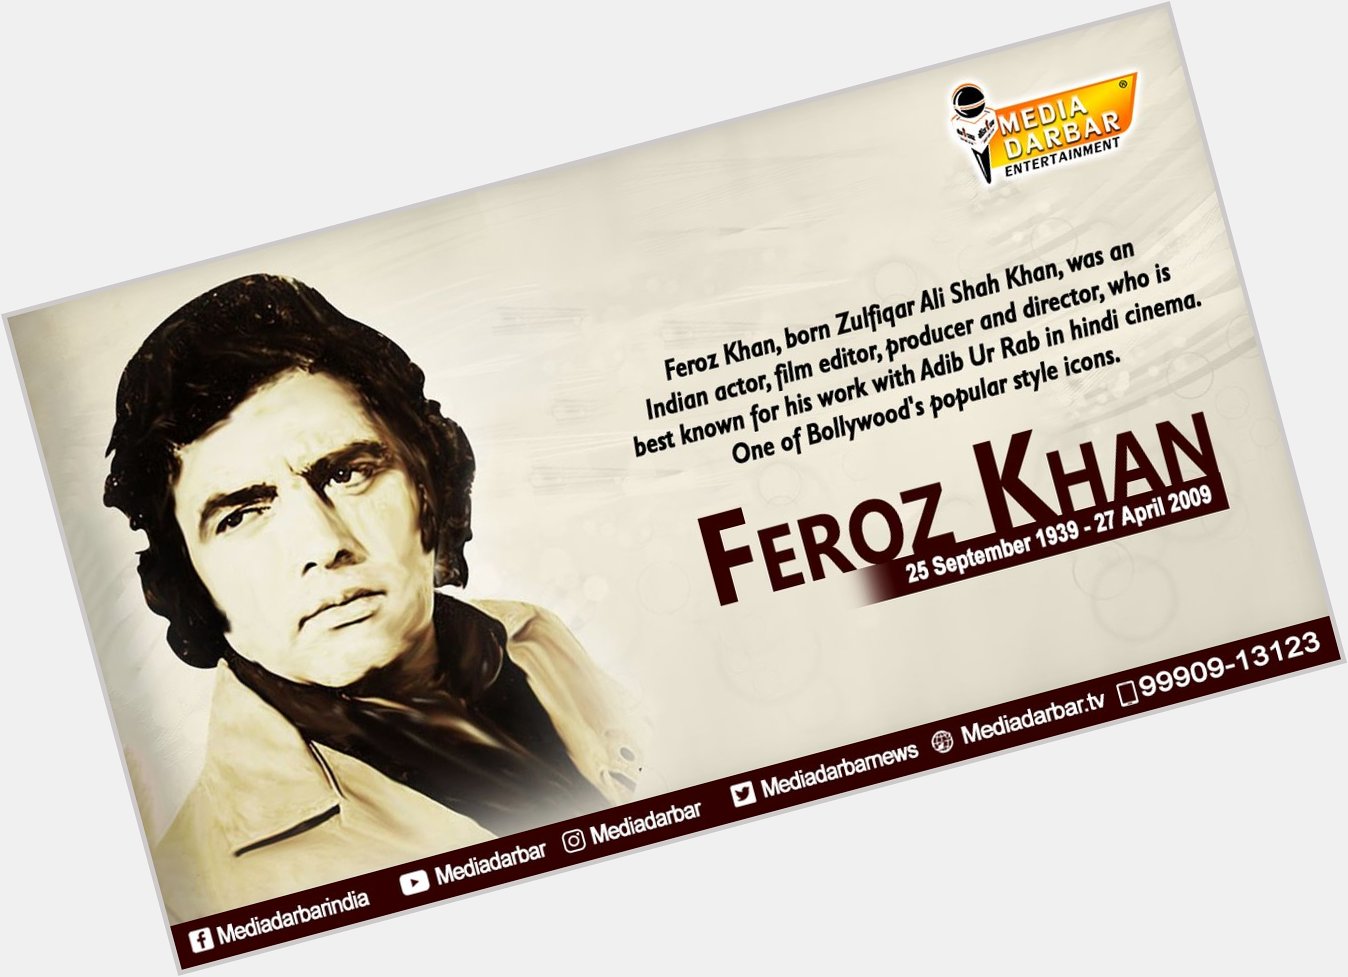 Wishing You A Very Happy Birthday To Feroz Khan  